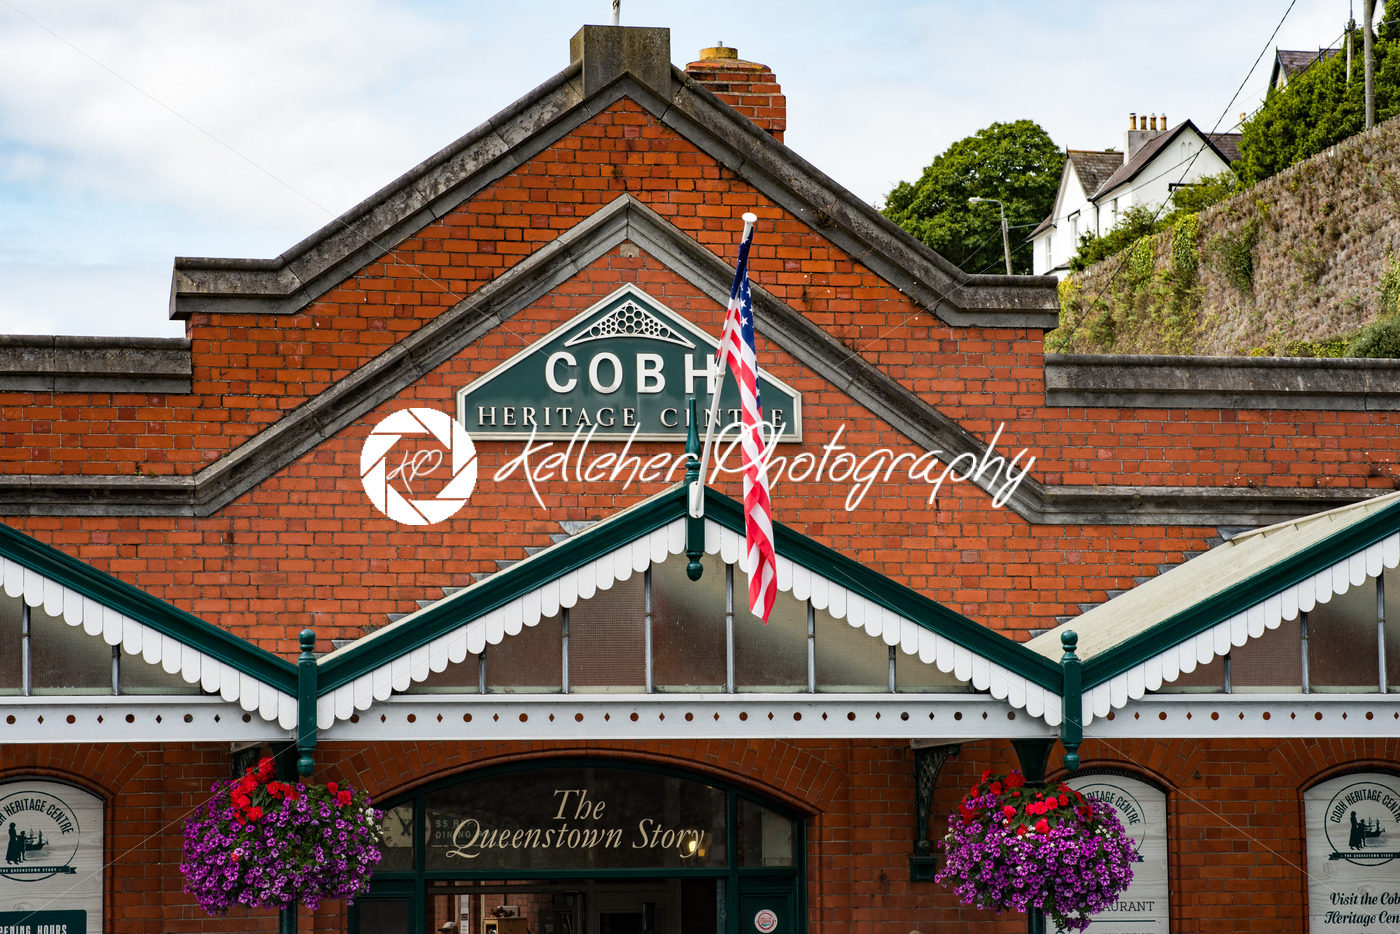 COBH, IRELAND – AUGUST 19, 2017: Heritage Center of Cobh, Ireland - Kelleher Photography Store